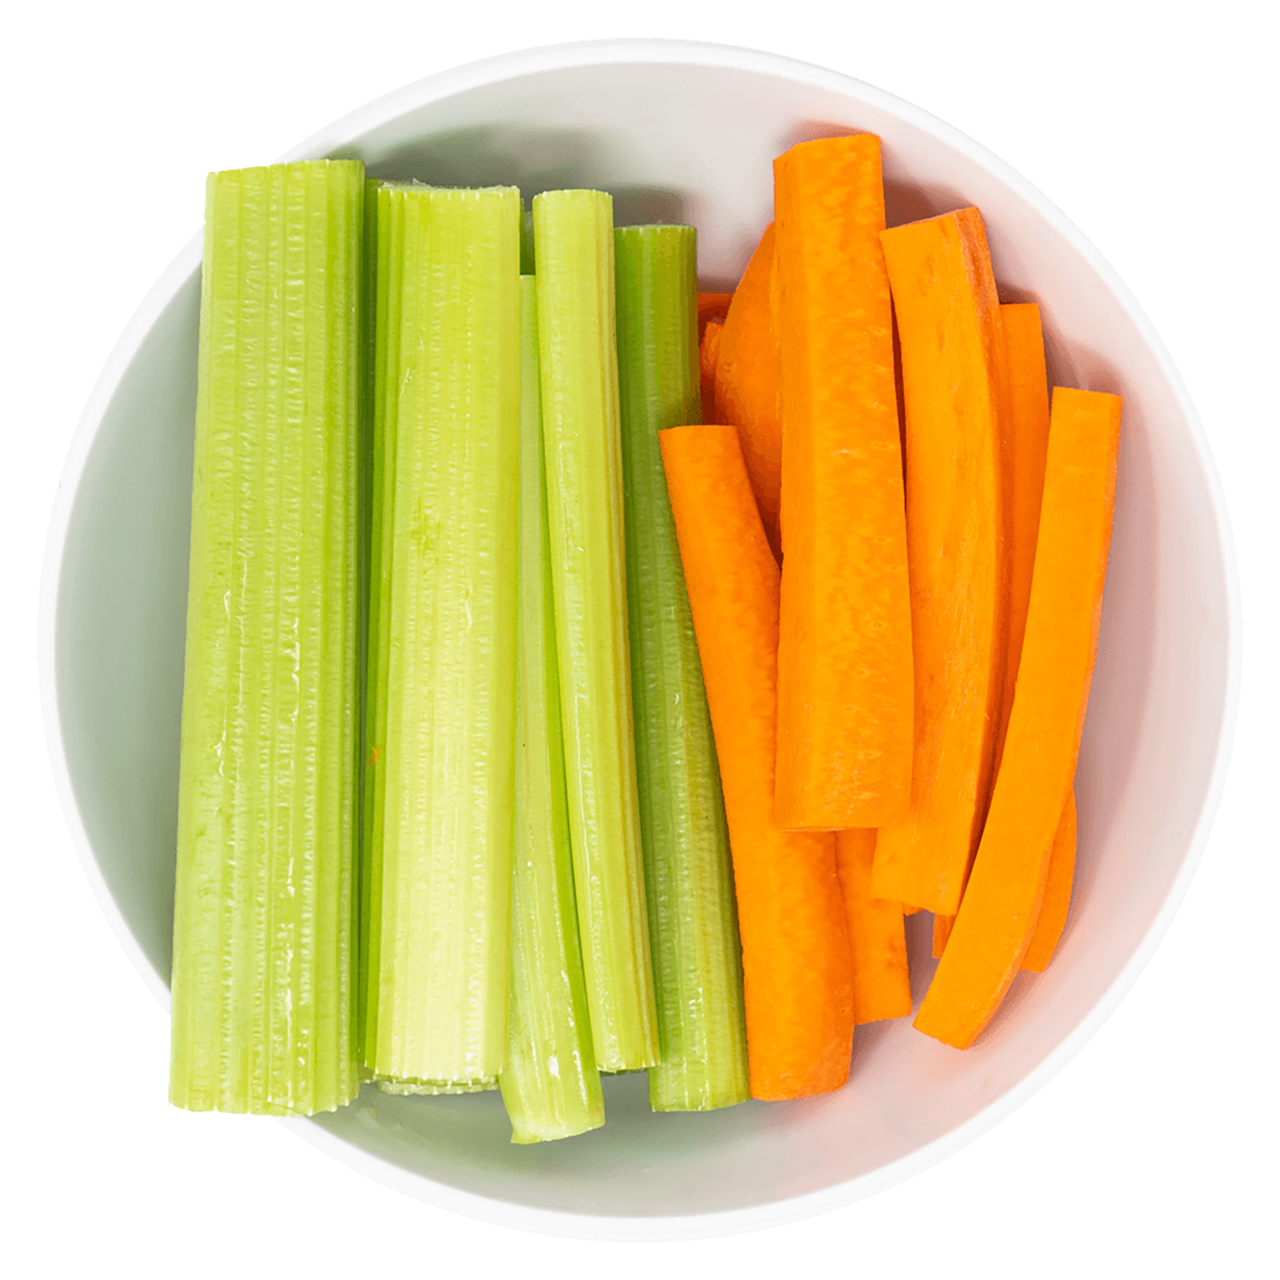 Carrot & Celery Sticks - Organic